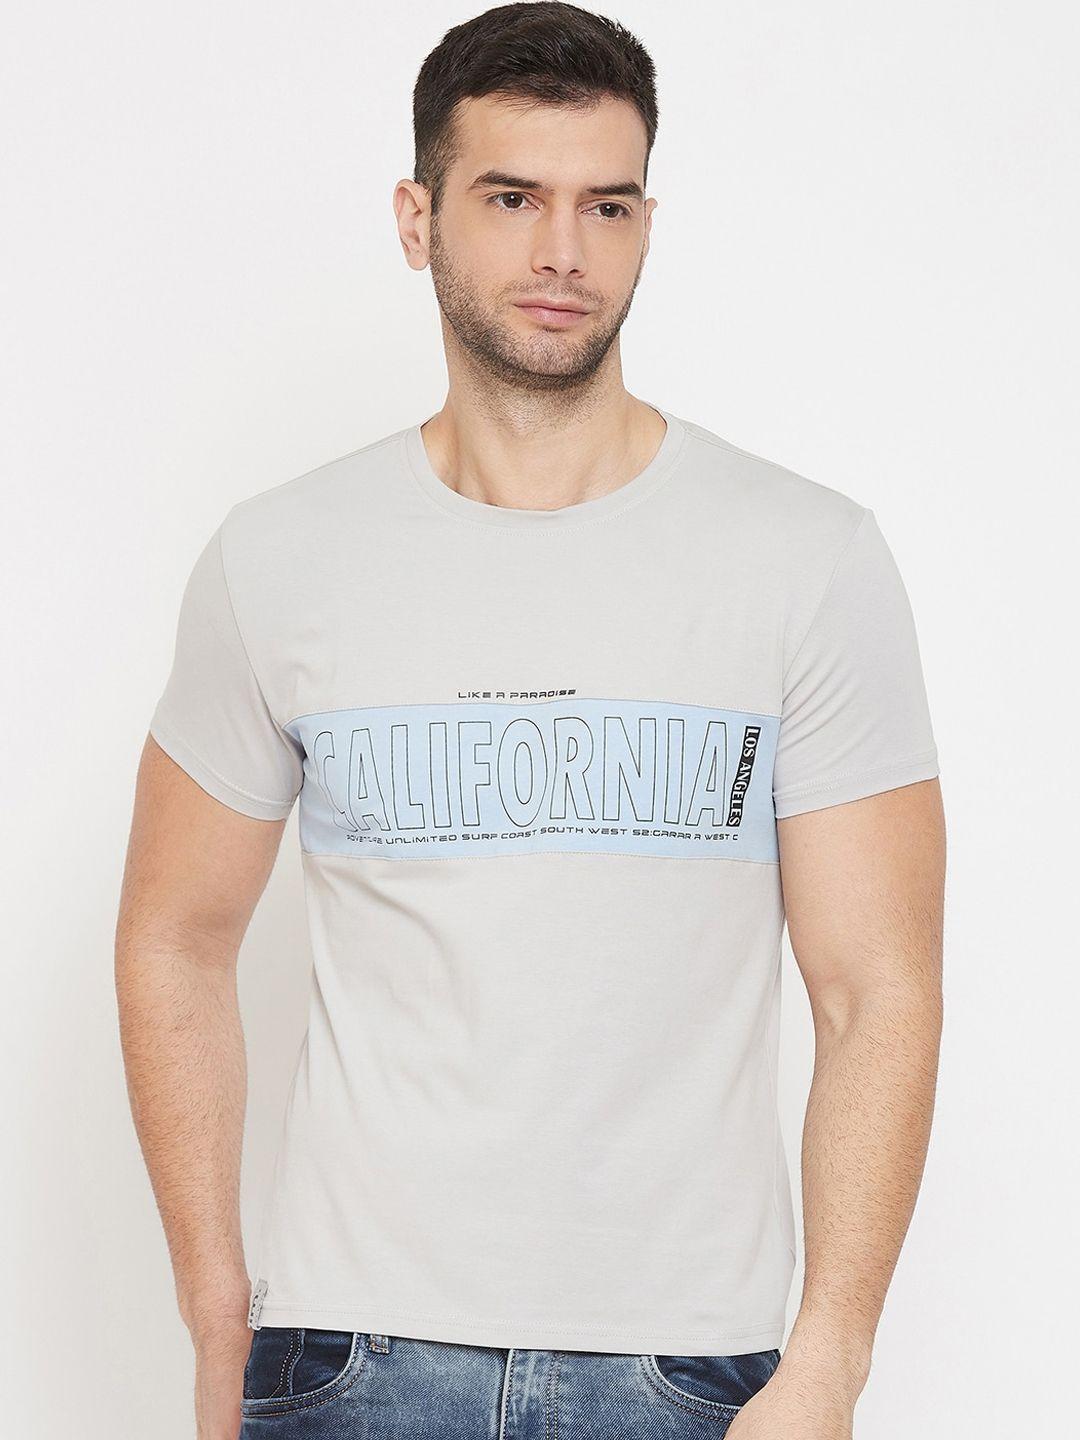 qubic men grey printed round neck t-shirt